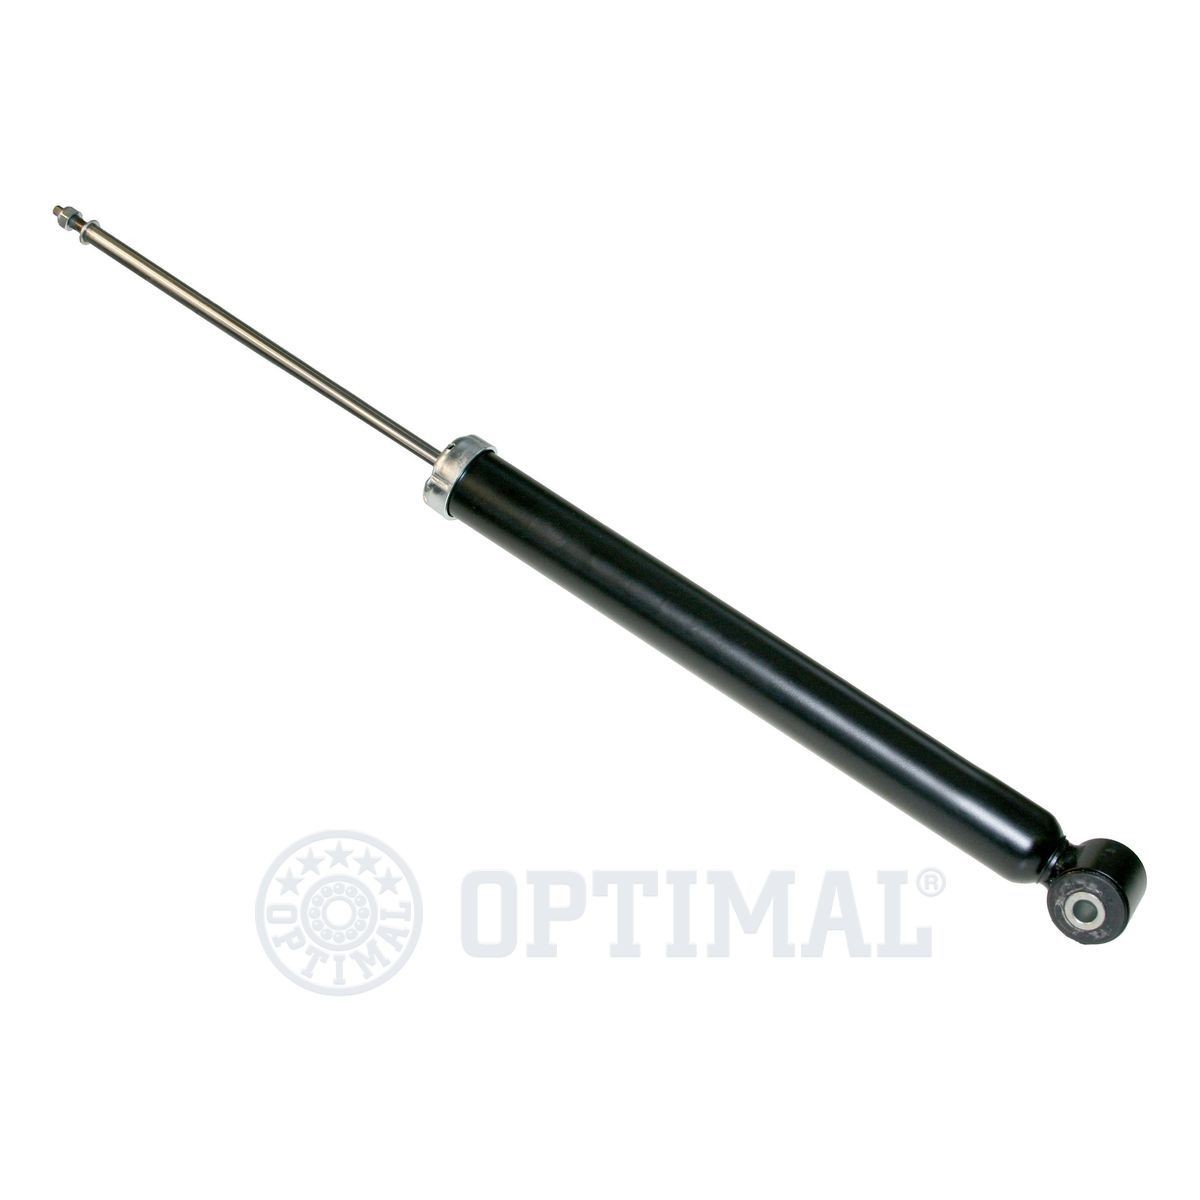 OPTIMAL A-1476G Shock absorber Rear Axle, Gas Pressure, Monotube, Spring-bearing Damper, Bottom eye, Top pin, M8x1.25